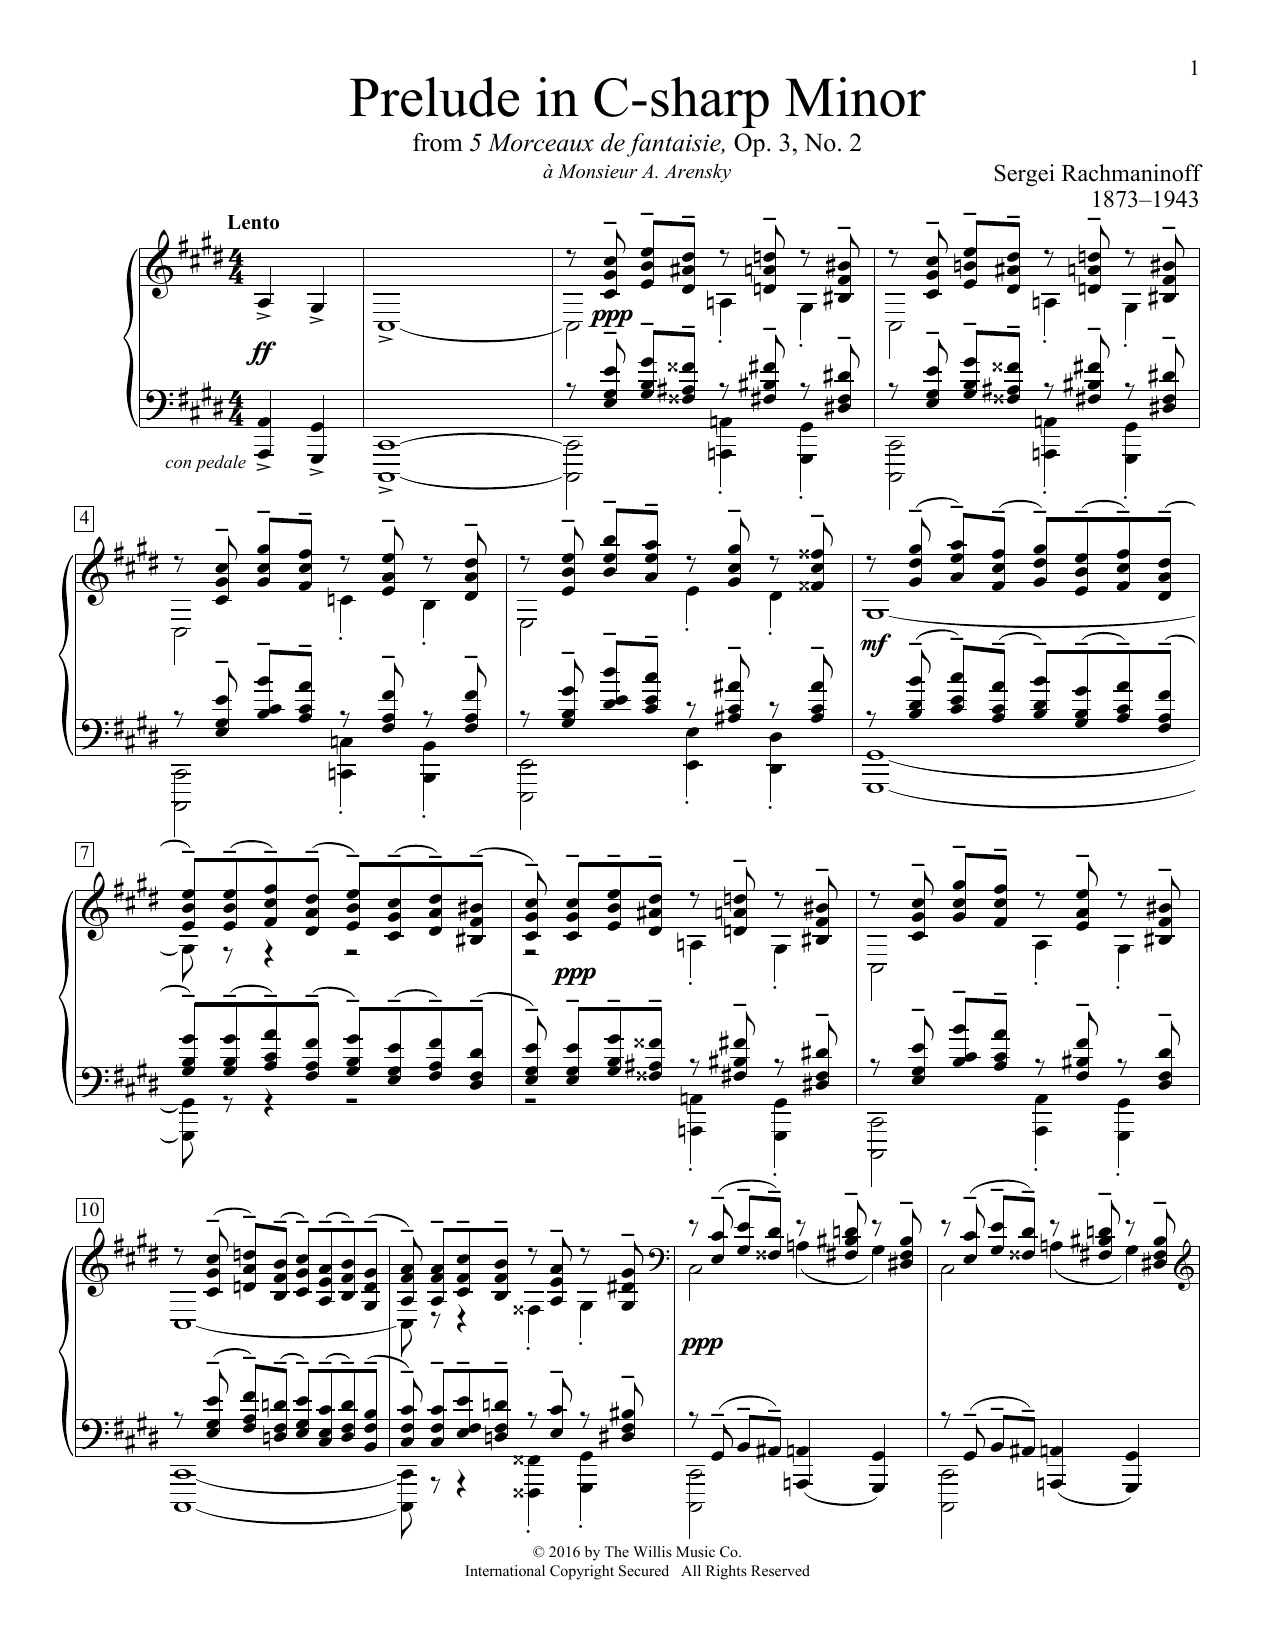 Download Sergei Rachmaninoff Prelude In C-Sharp Minor Sheet Music